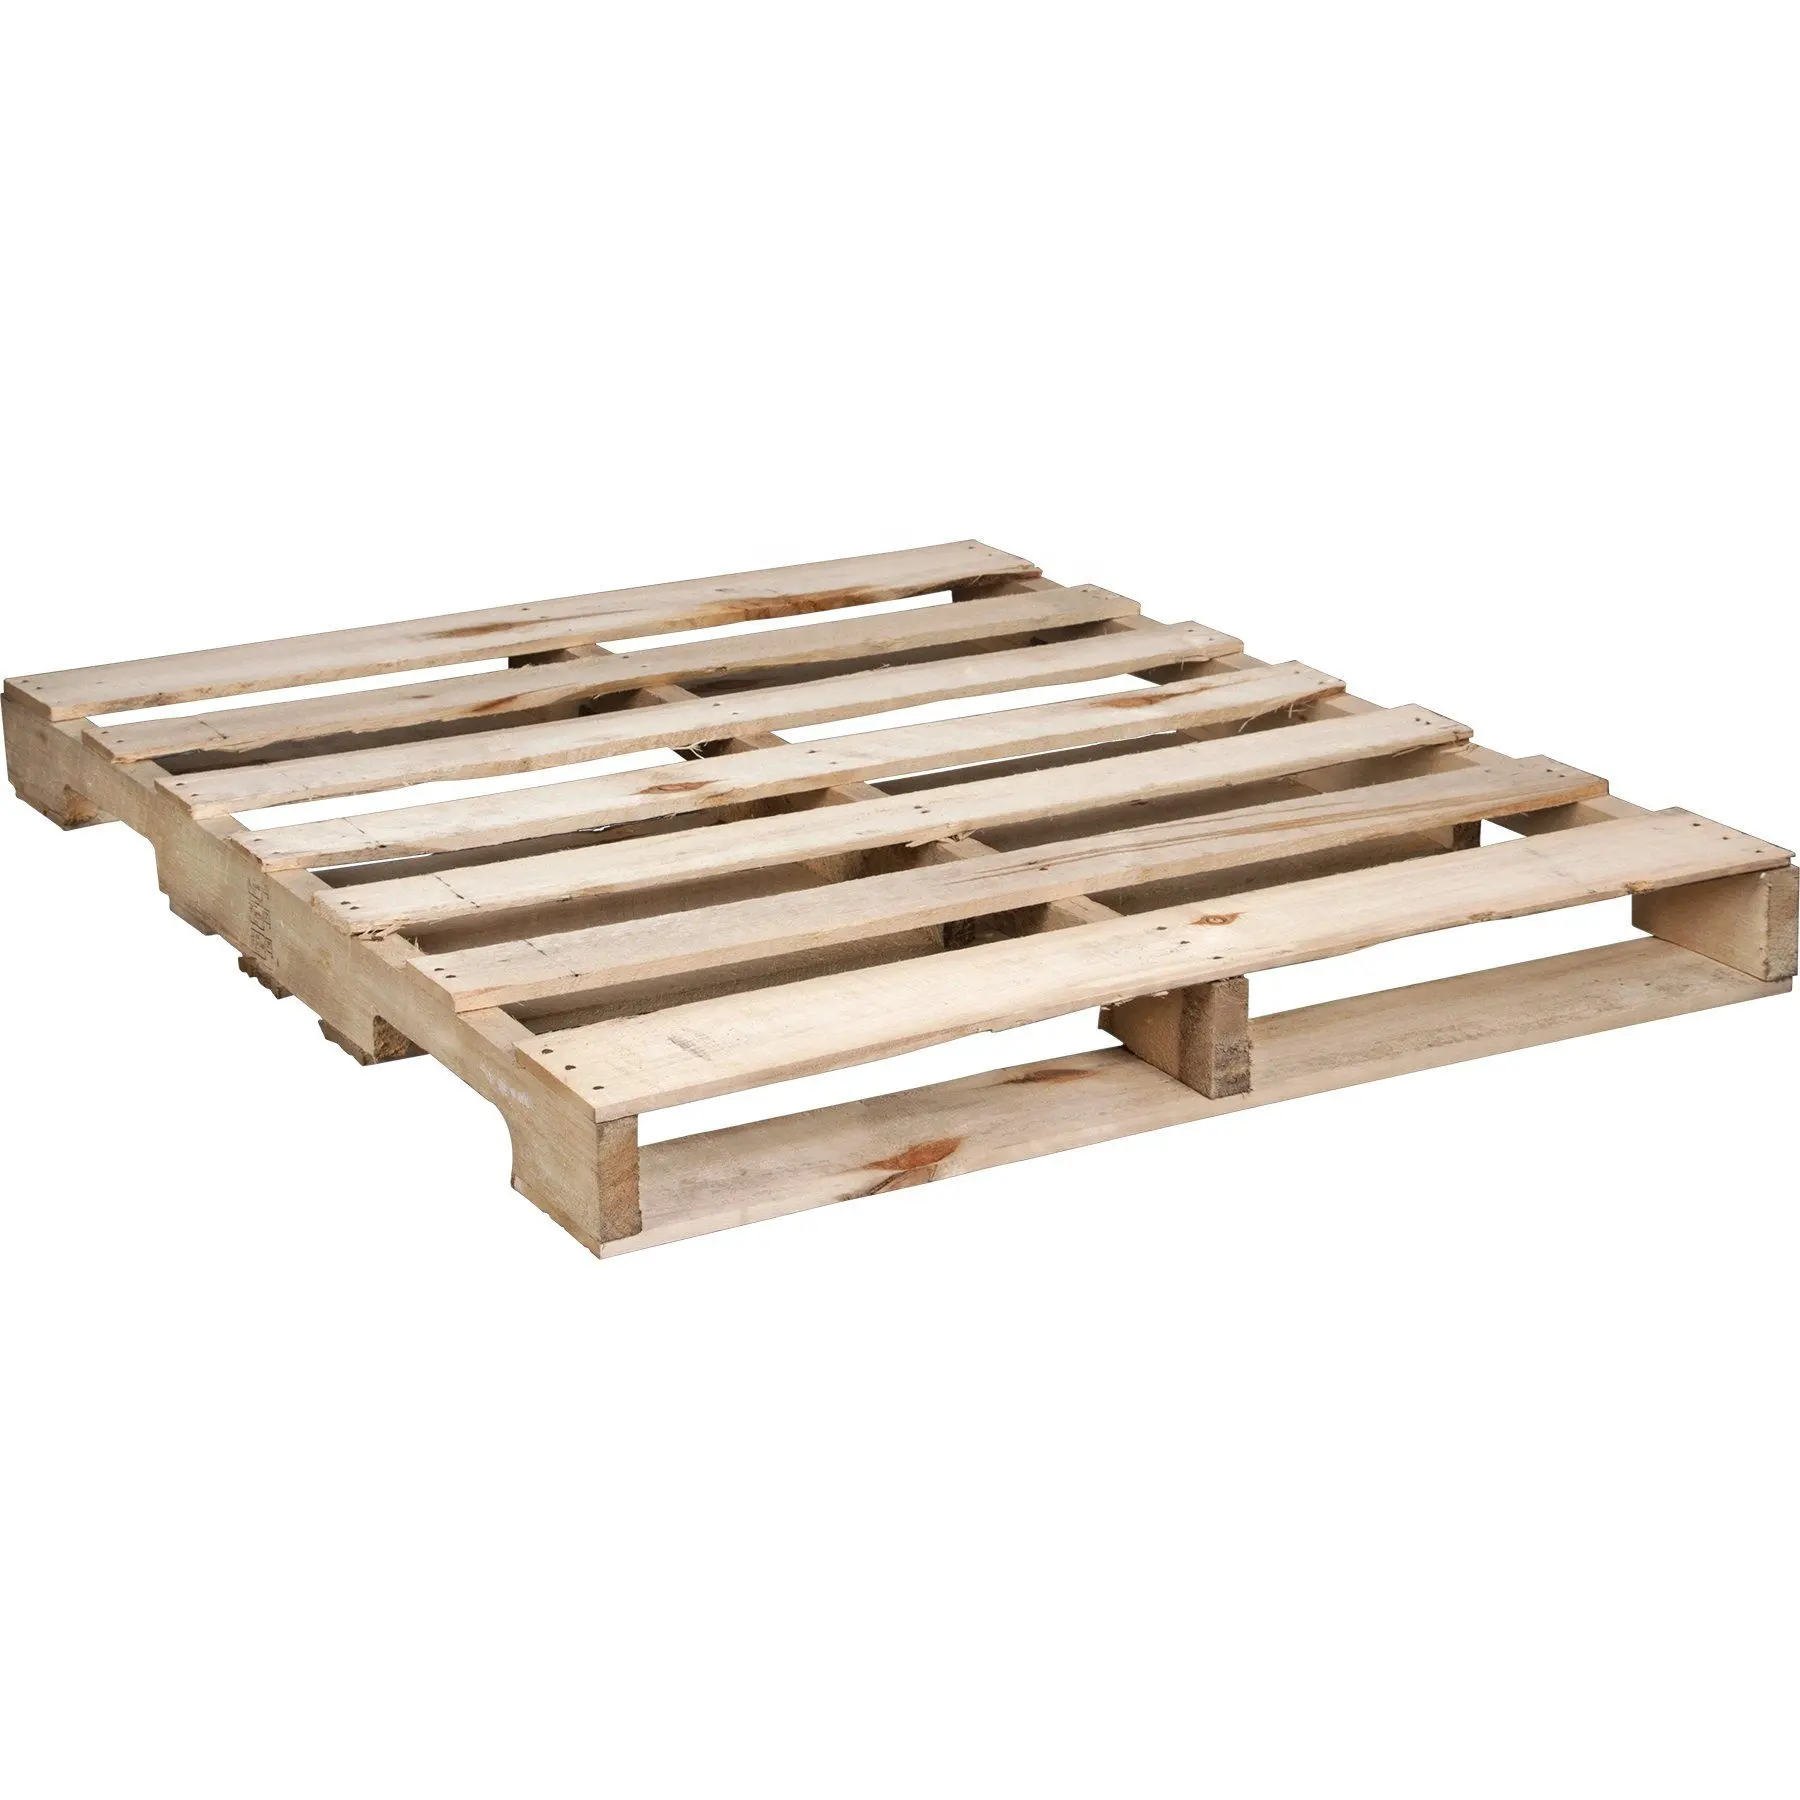 Wholesale solid wood warehouse pallet pine wood pallet